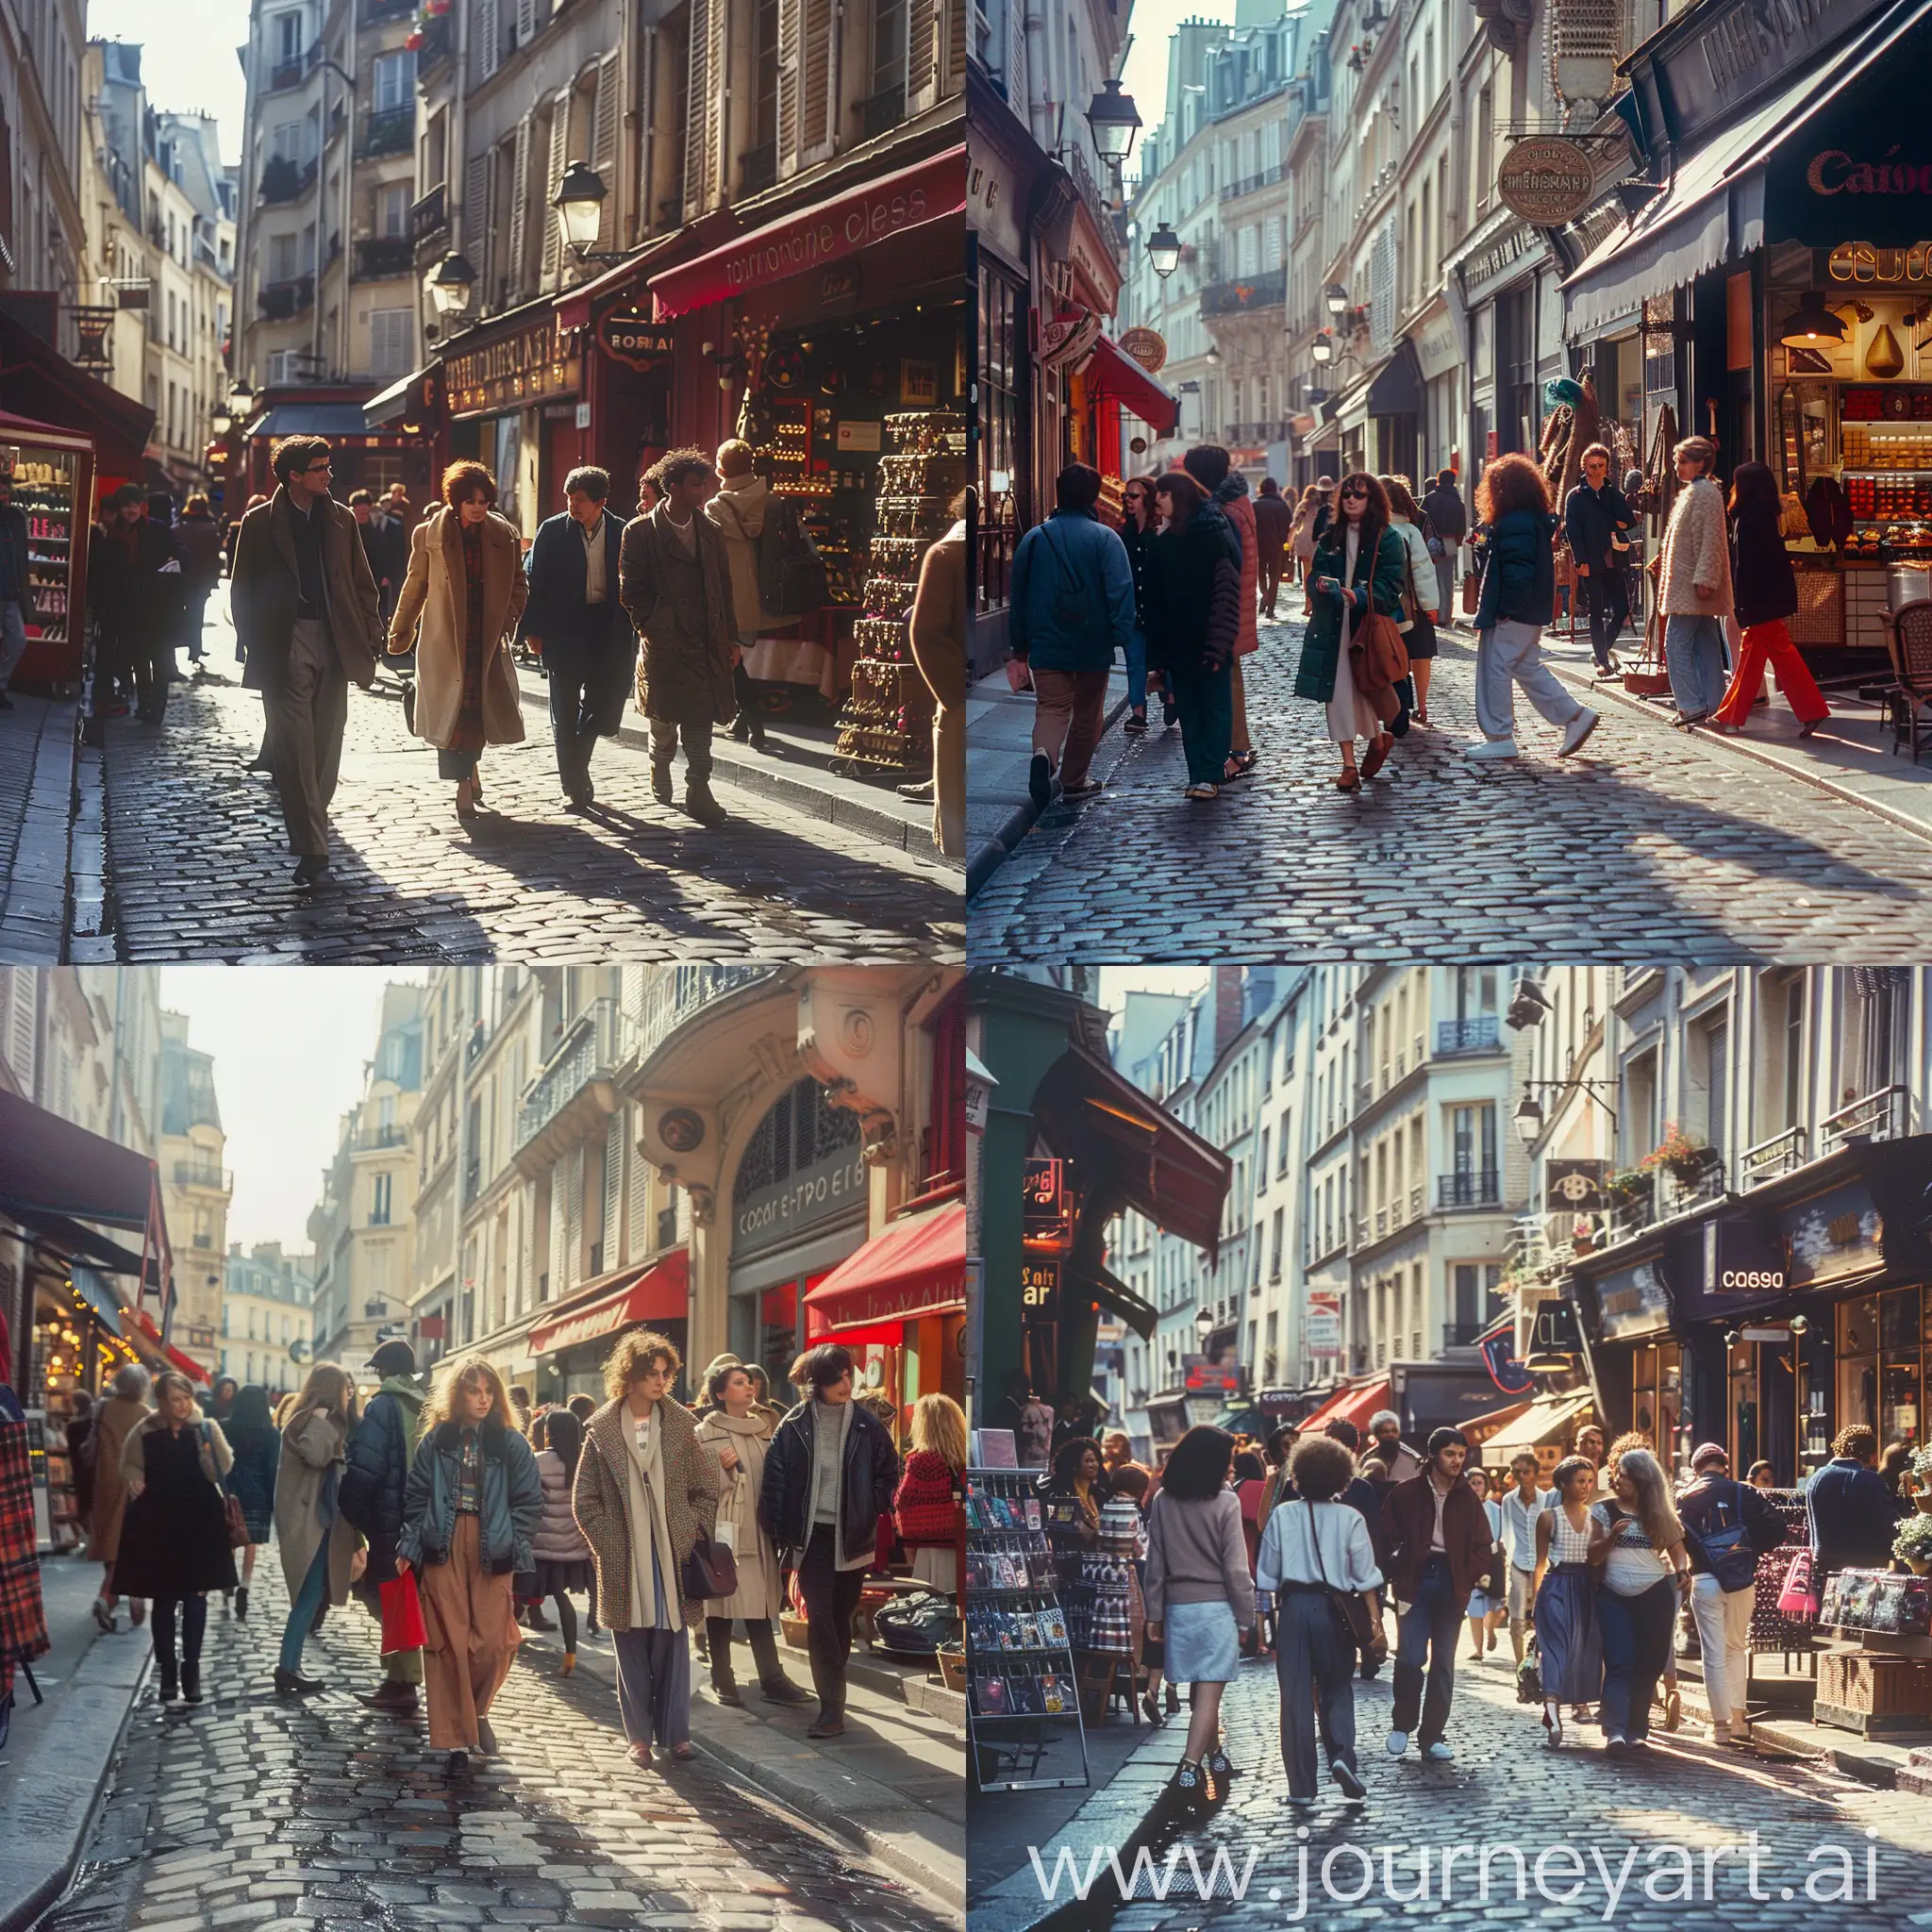 Morning-Parisian-Lifestyle-Authentic-1991-Street-Scene-in-Vibrant-Retro-Colors